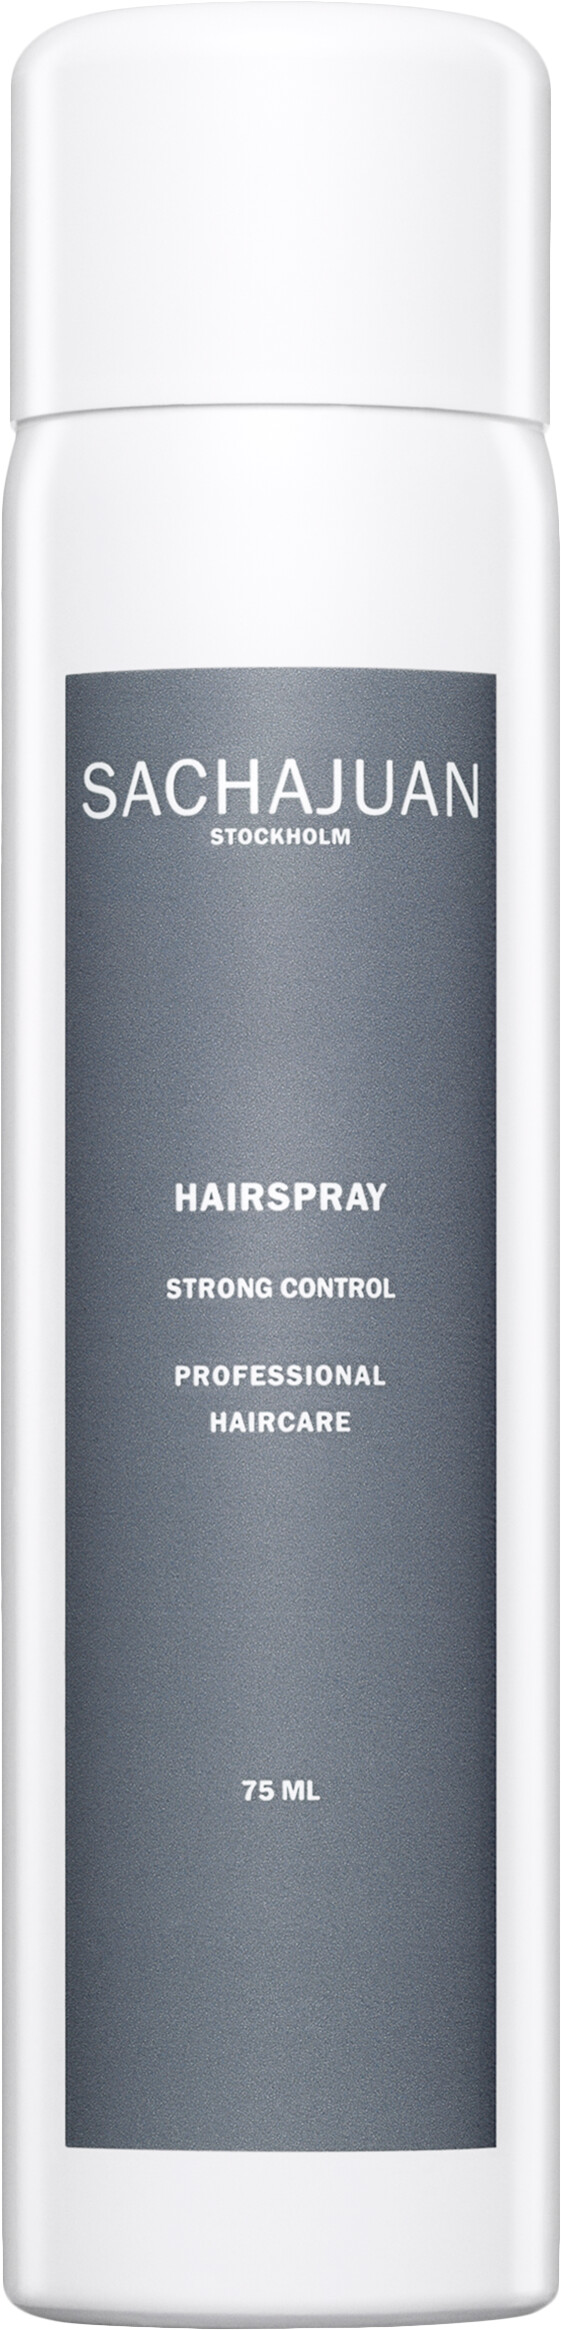 Sachajuan Hairspray - Strong Control 75ml